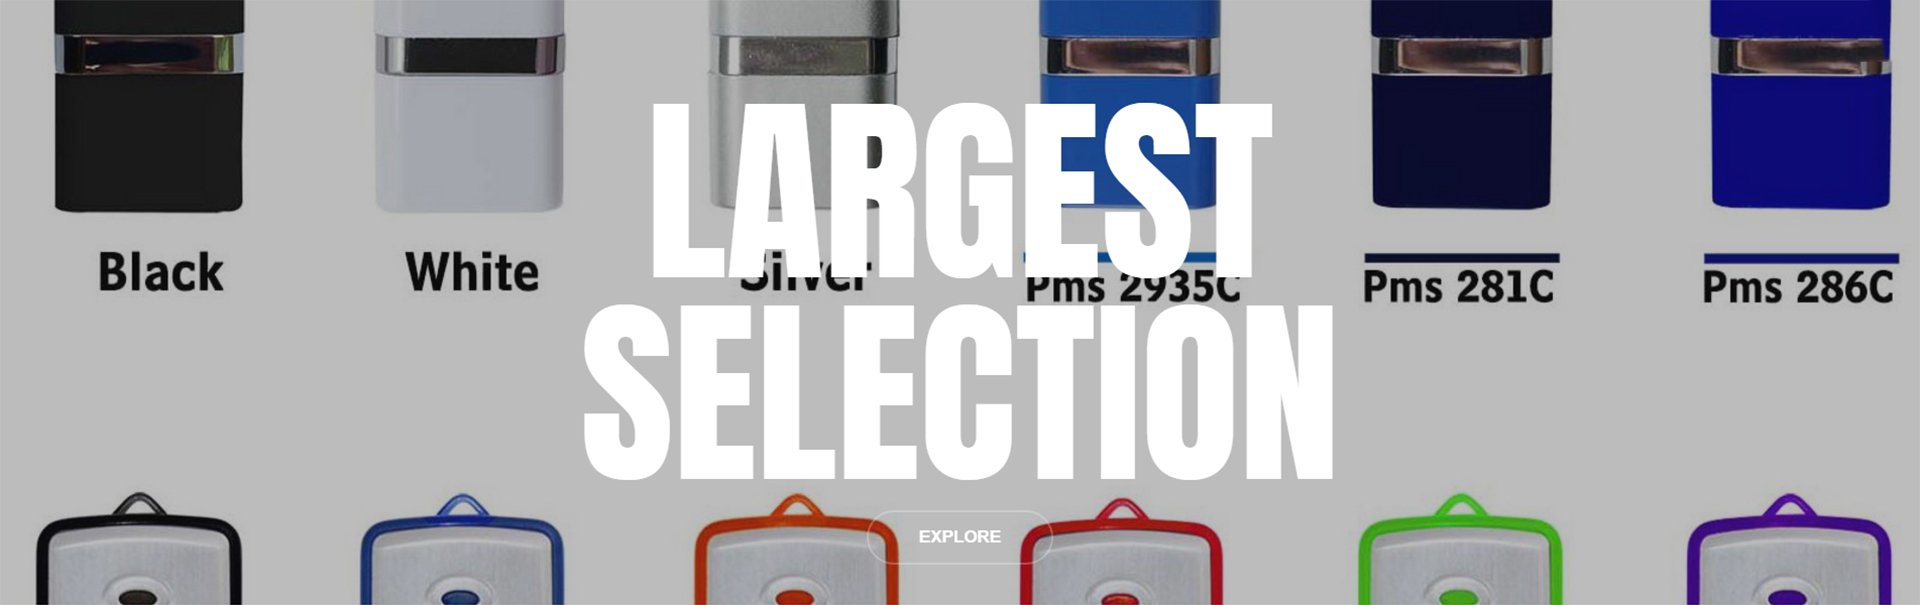 Largest Custom USB Selection